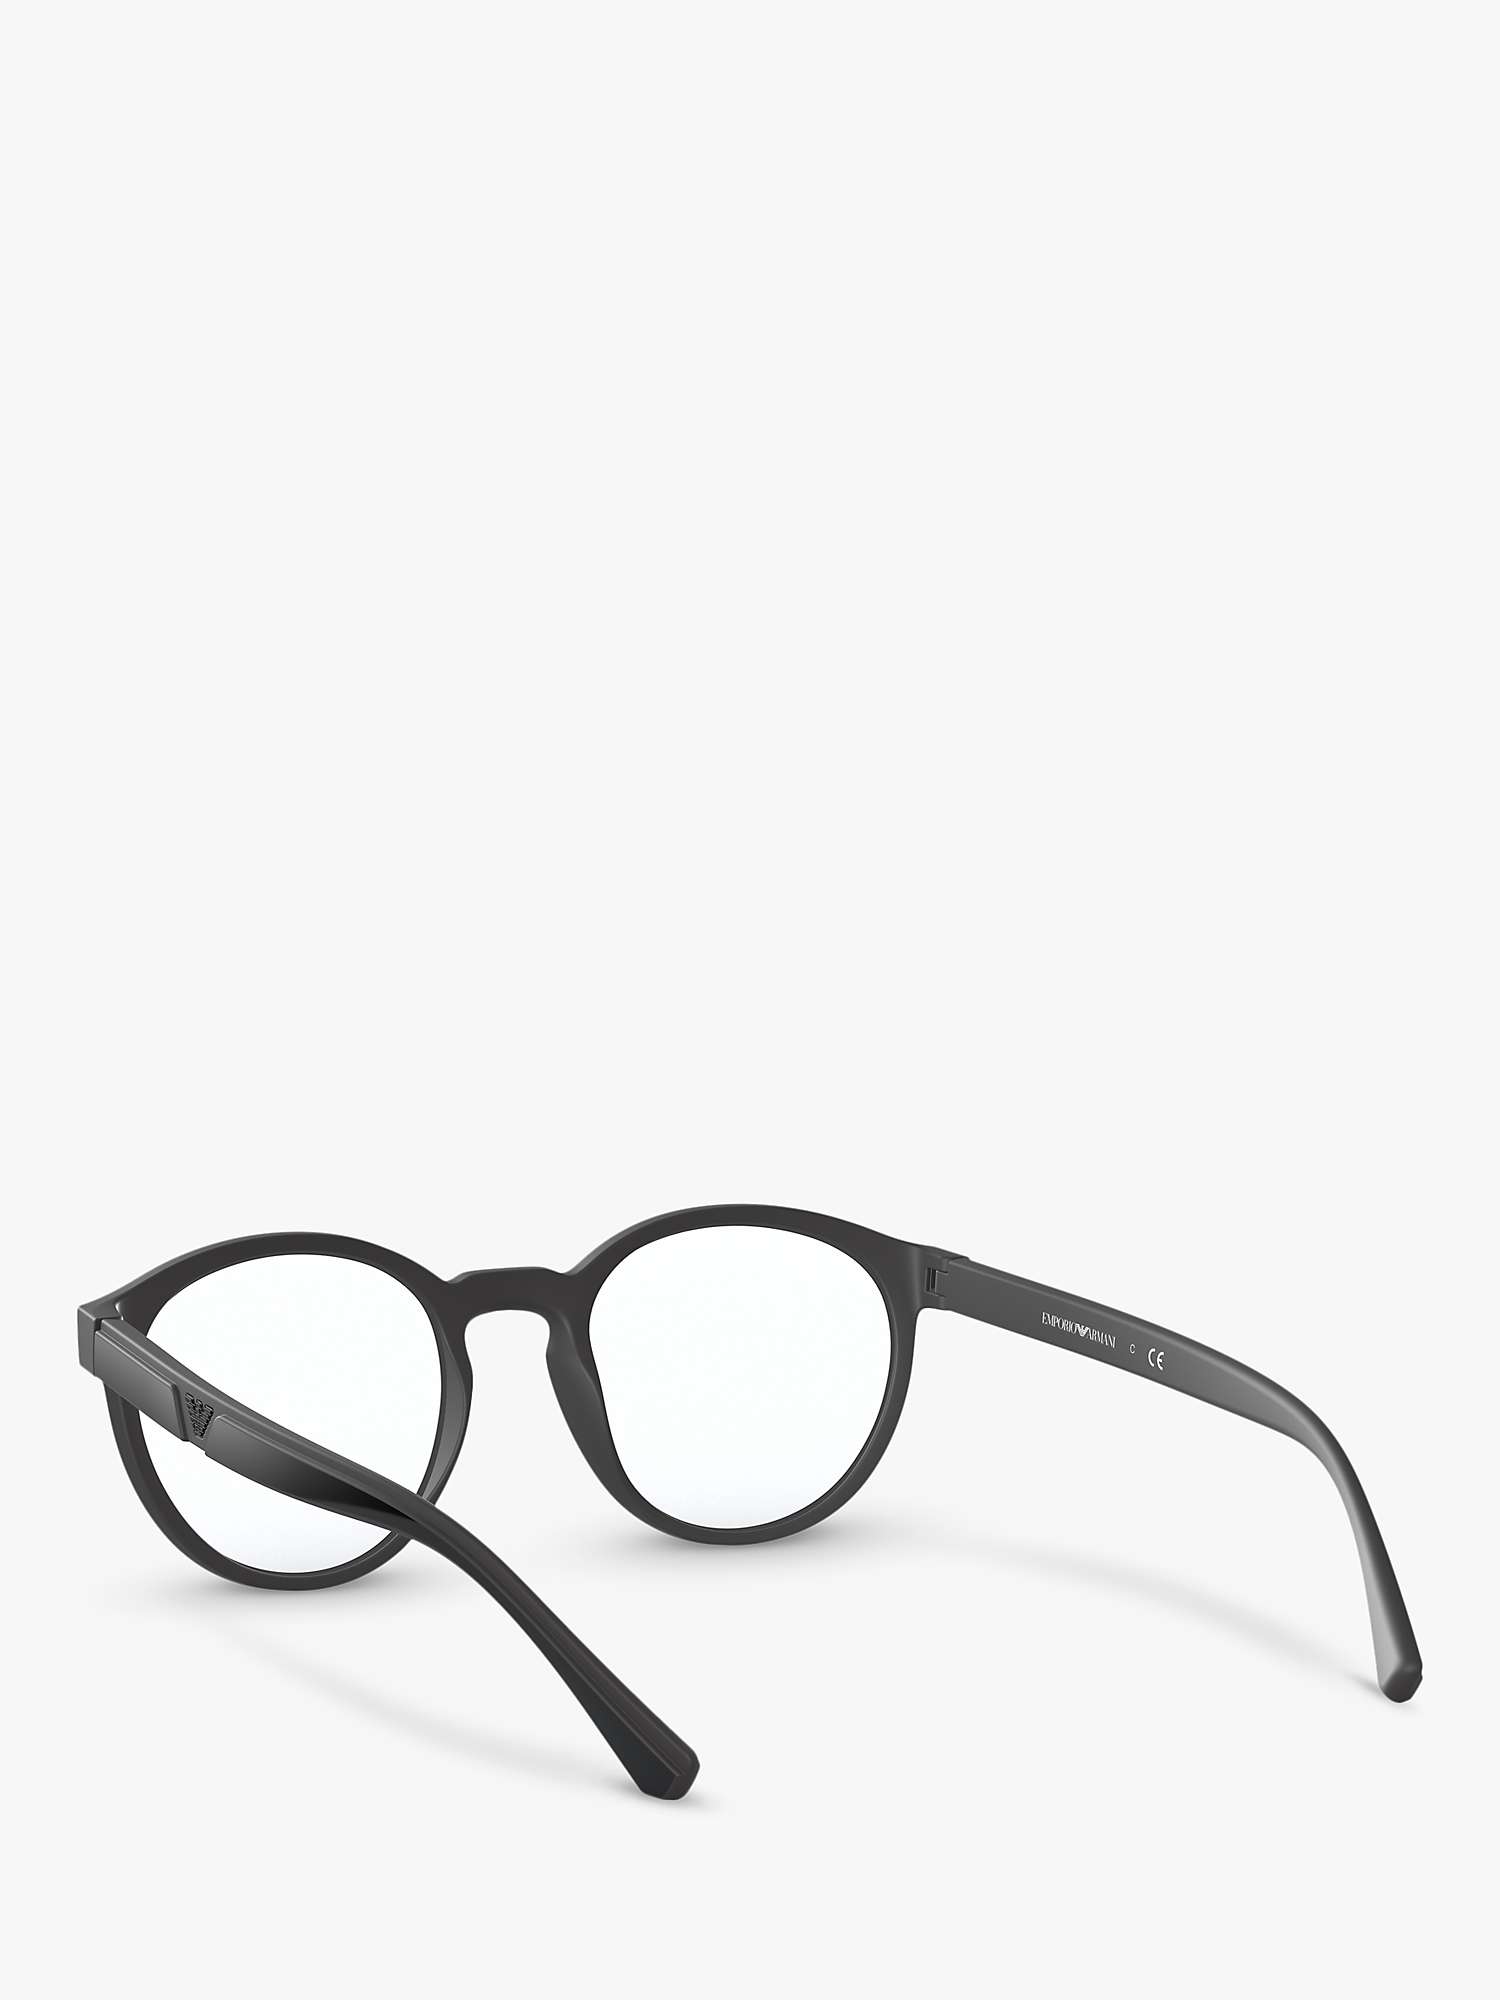 Buy Emporio Armani EA4152 Men's Oval Sunglasses Online at johnlewis.com